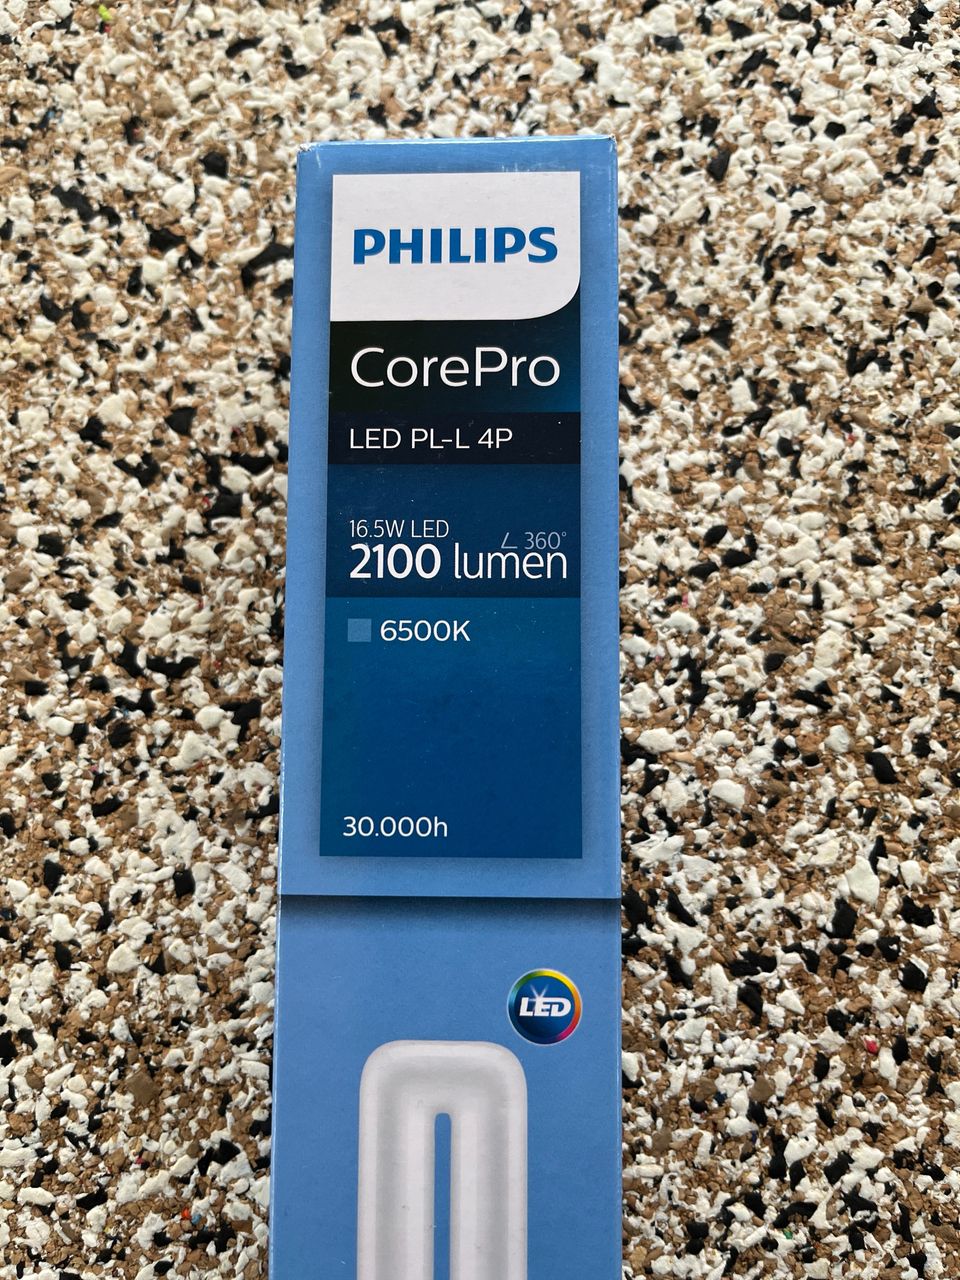 Philips corepro led pl-l 4p